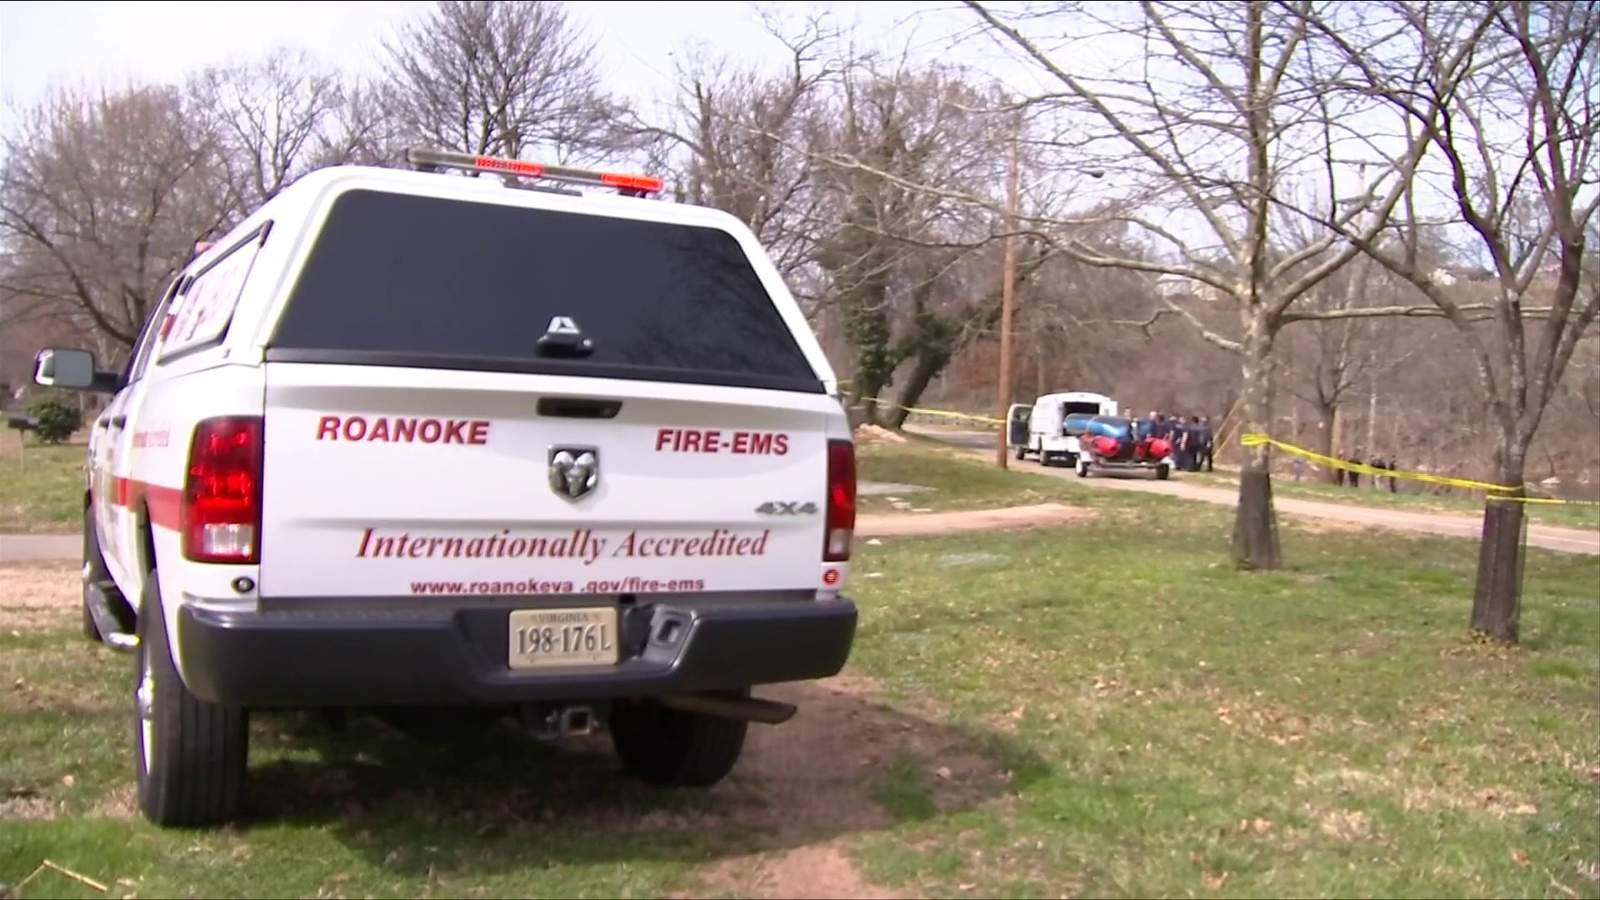 Body recovered from Roanoke River identified as 40-year-old Roanoke man